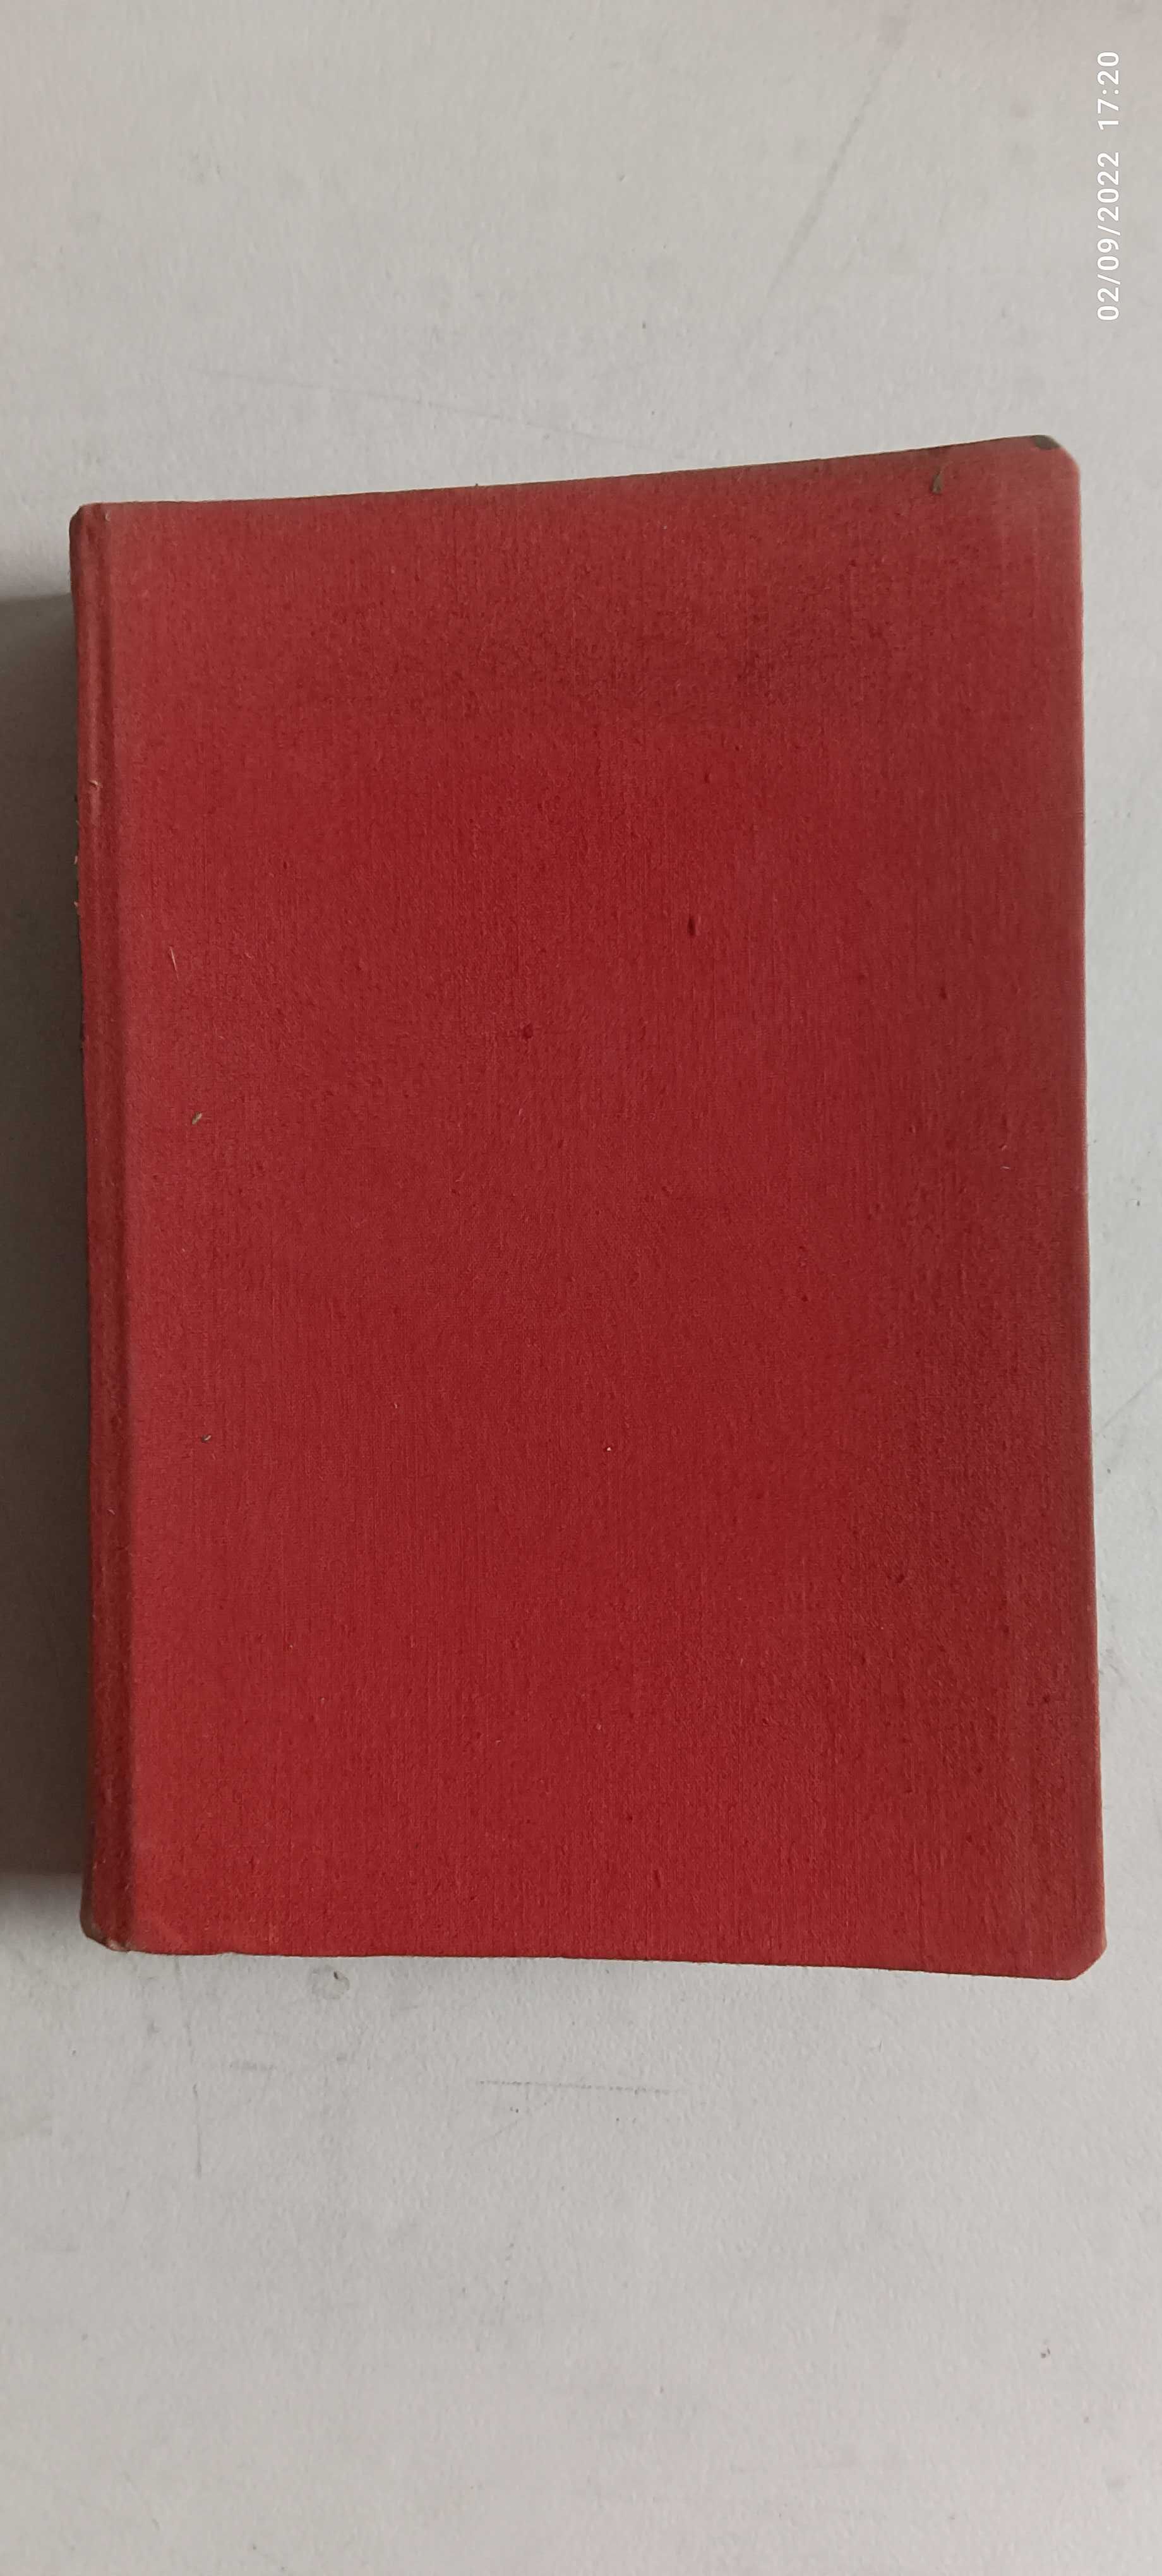 Livro PA-4 - Emil Ludwig - Guilherme 2